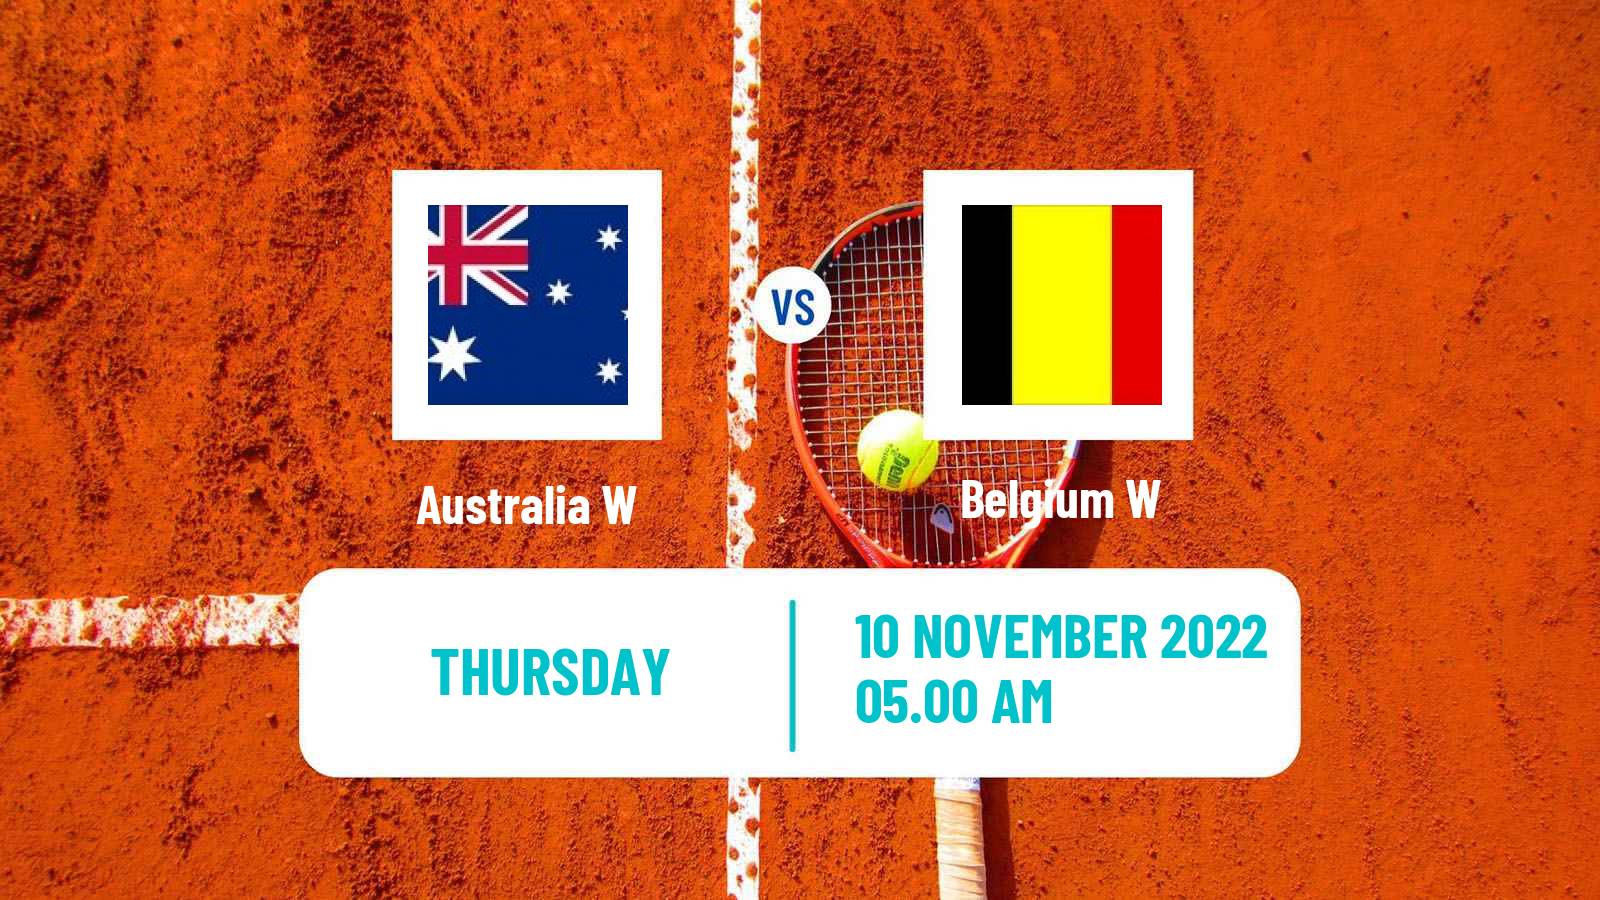 Tennis WTA Billie Jean King Cup World Group Teams Australia W - Belgium W